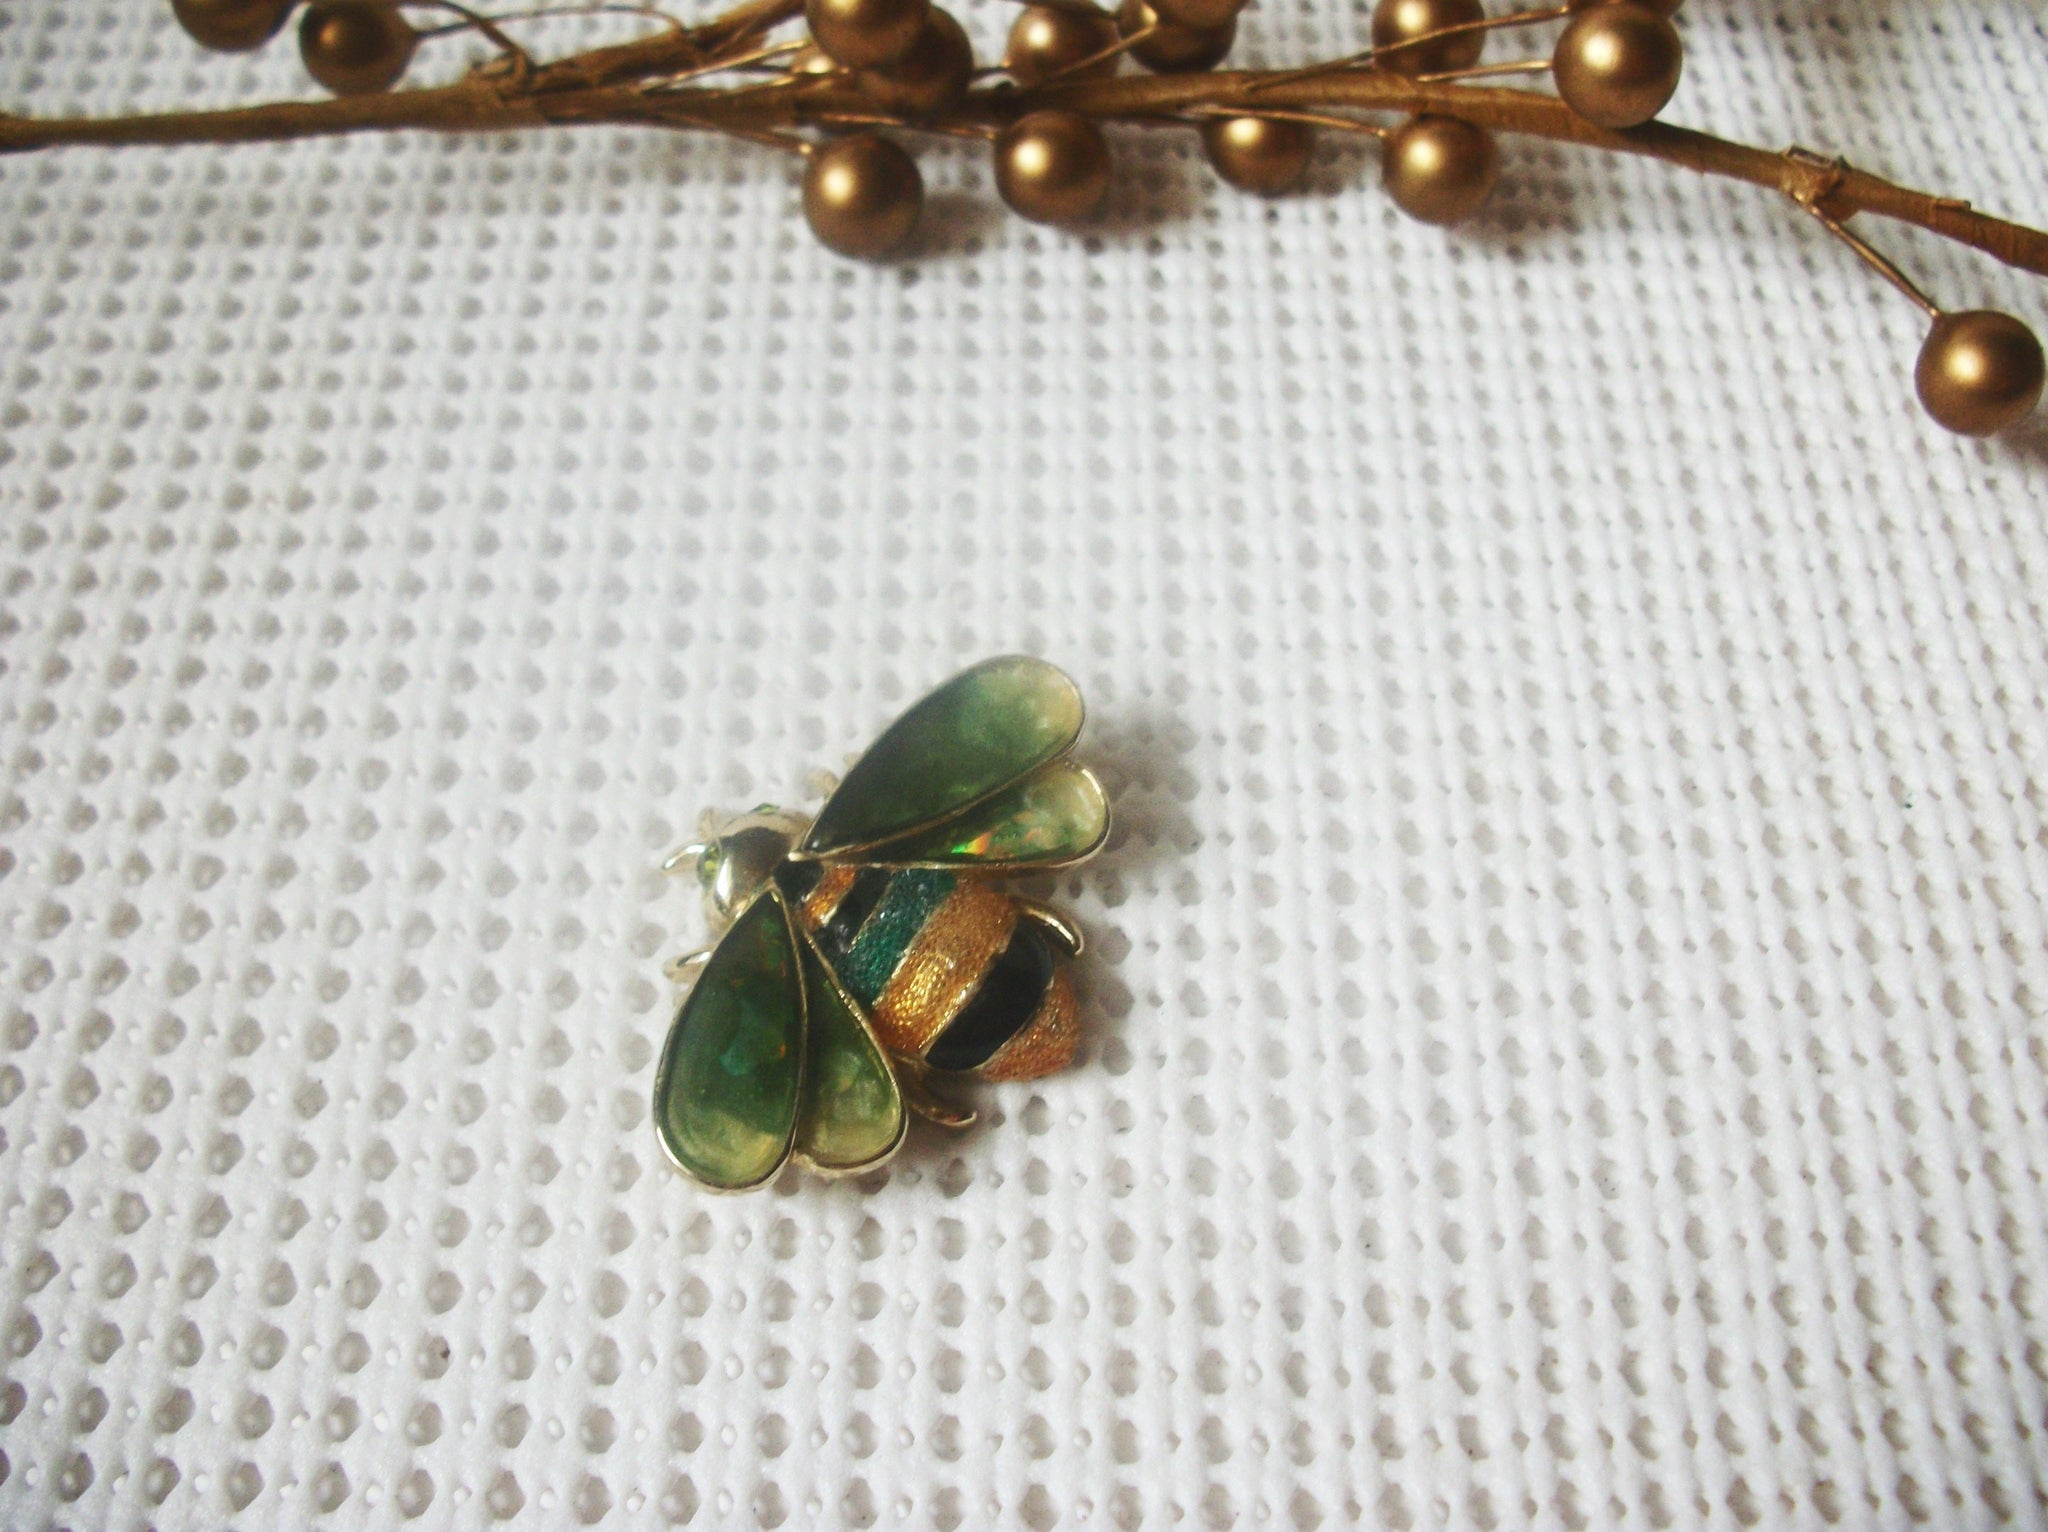 Vintage Brooch Pin, Signed MONET Paua Abalone Wings Peridot Eyes Enameled Bee Gold Tone,  82317